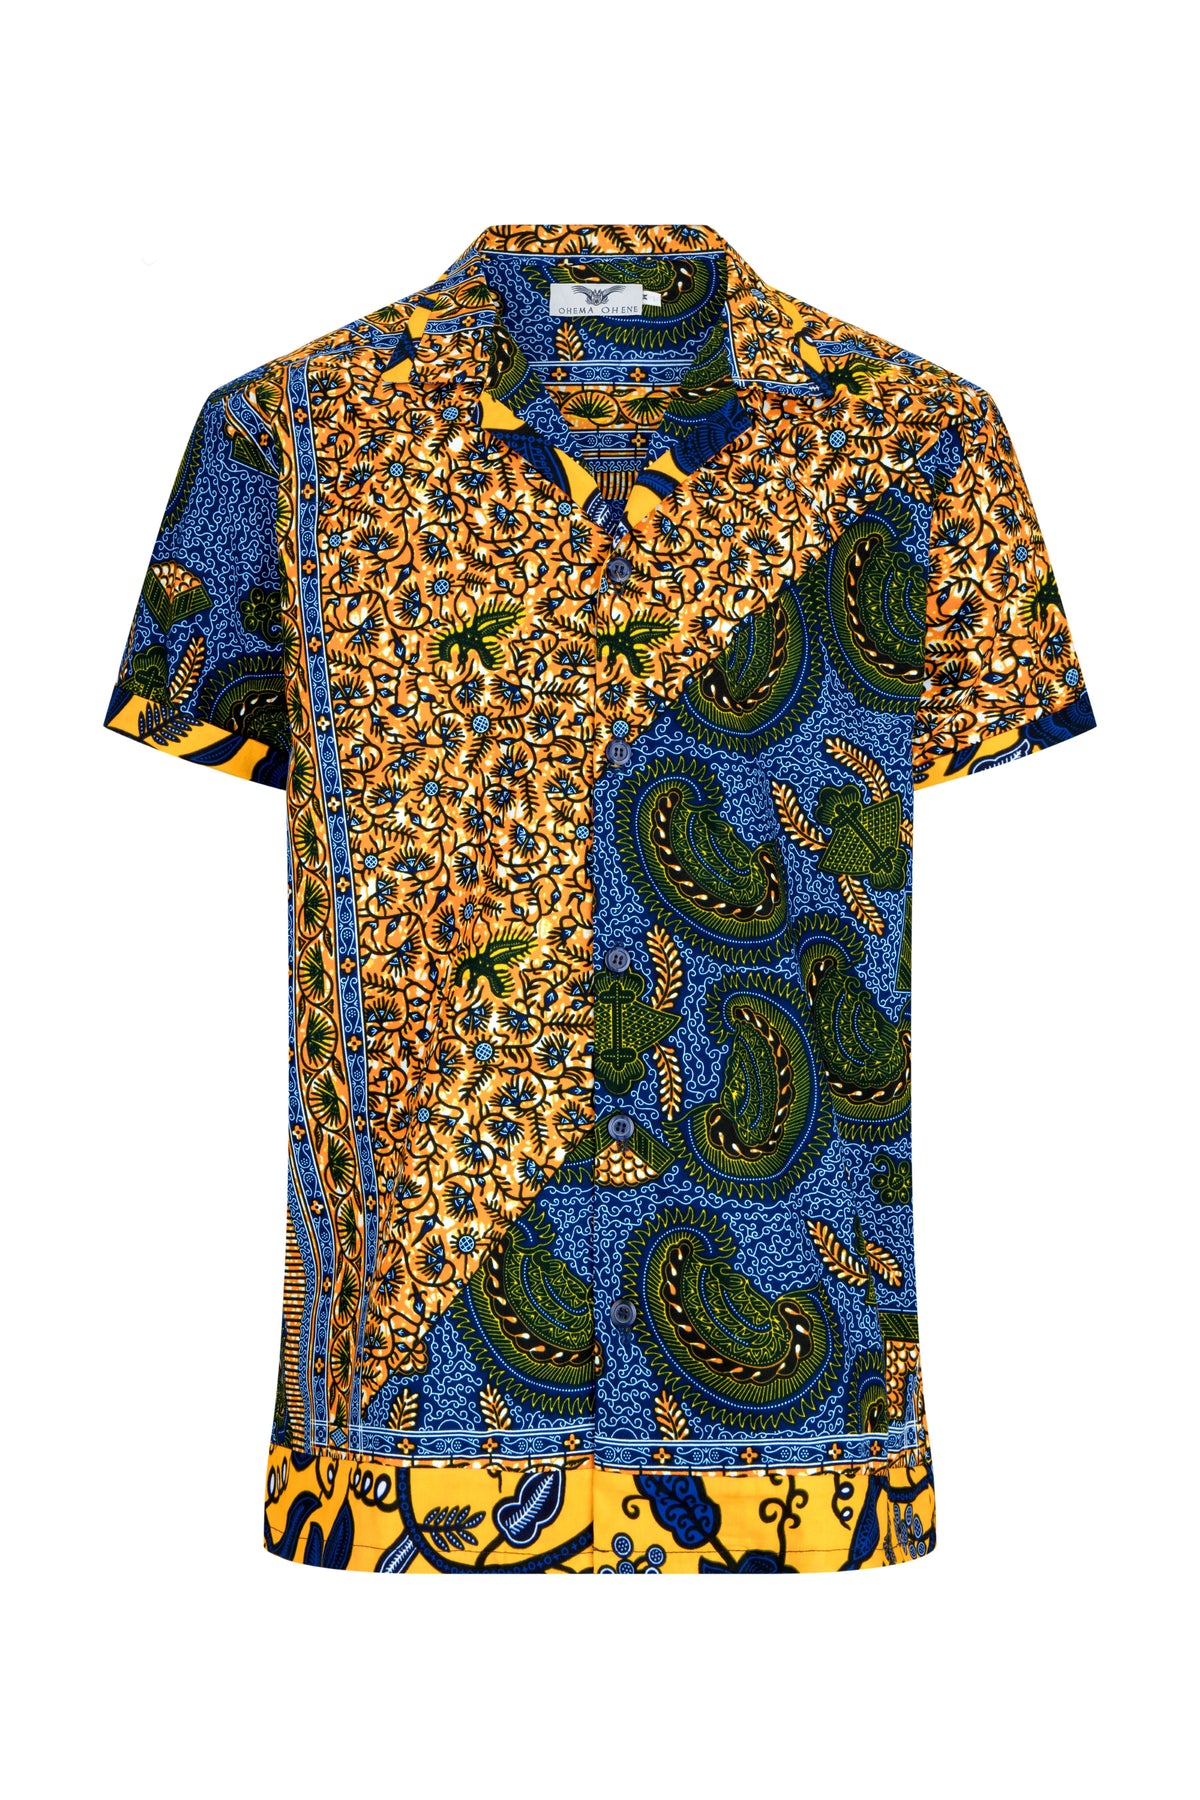 Chris Miami Collar shirt Meba - OHEMA OHENE AFRICAN INSPIRED FASHION